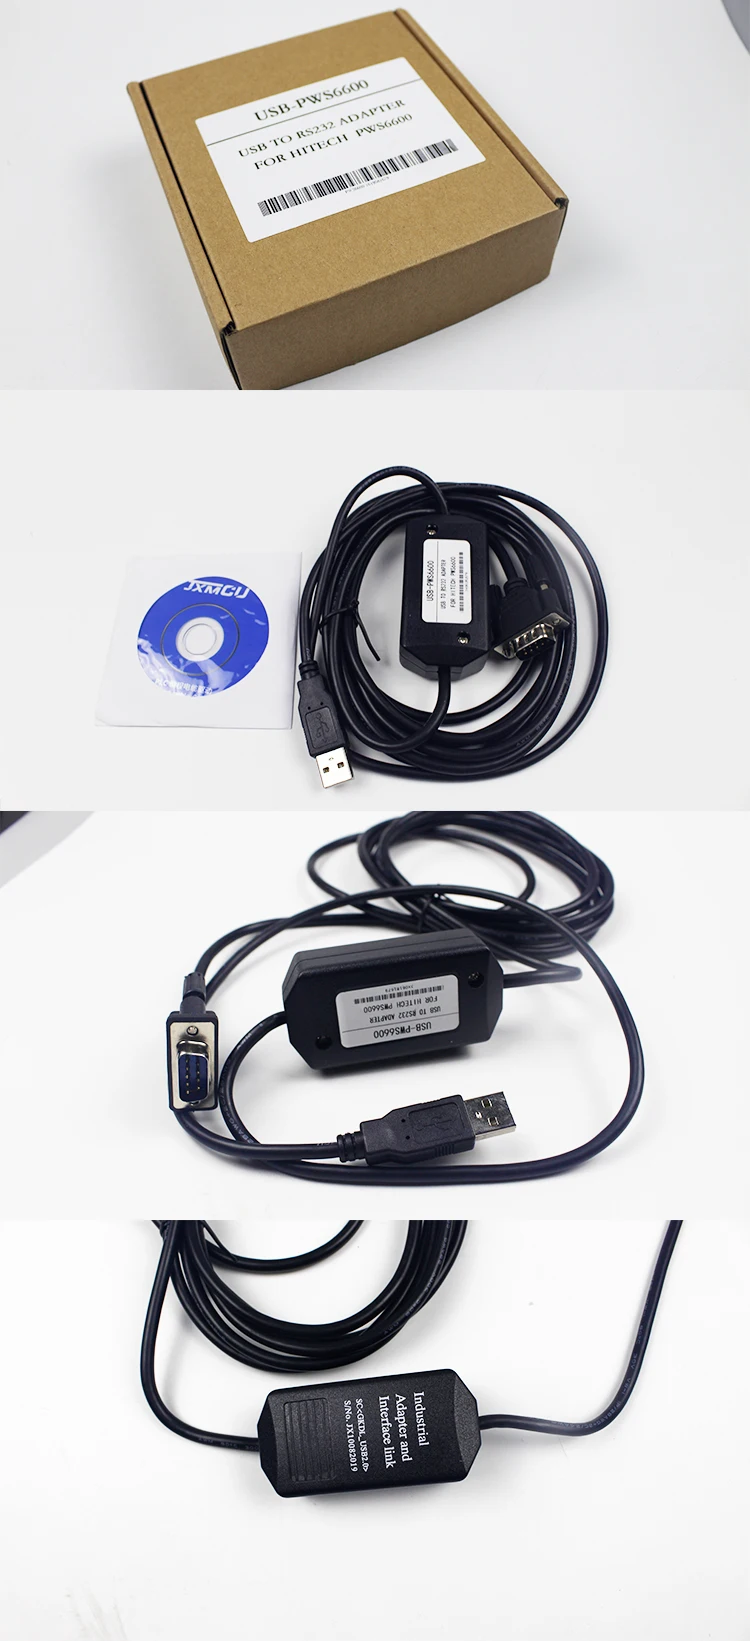 Hitech Programming Cable USB-PWS6600 kf